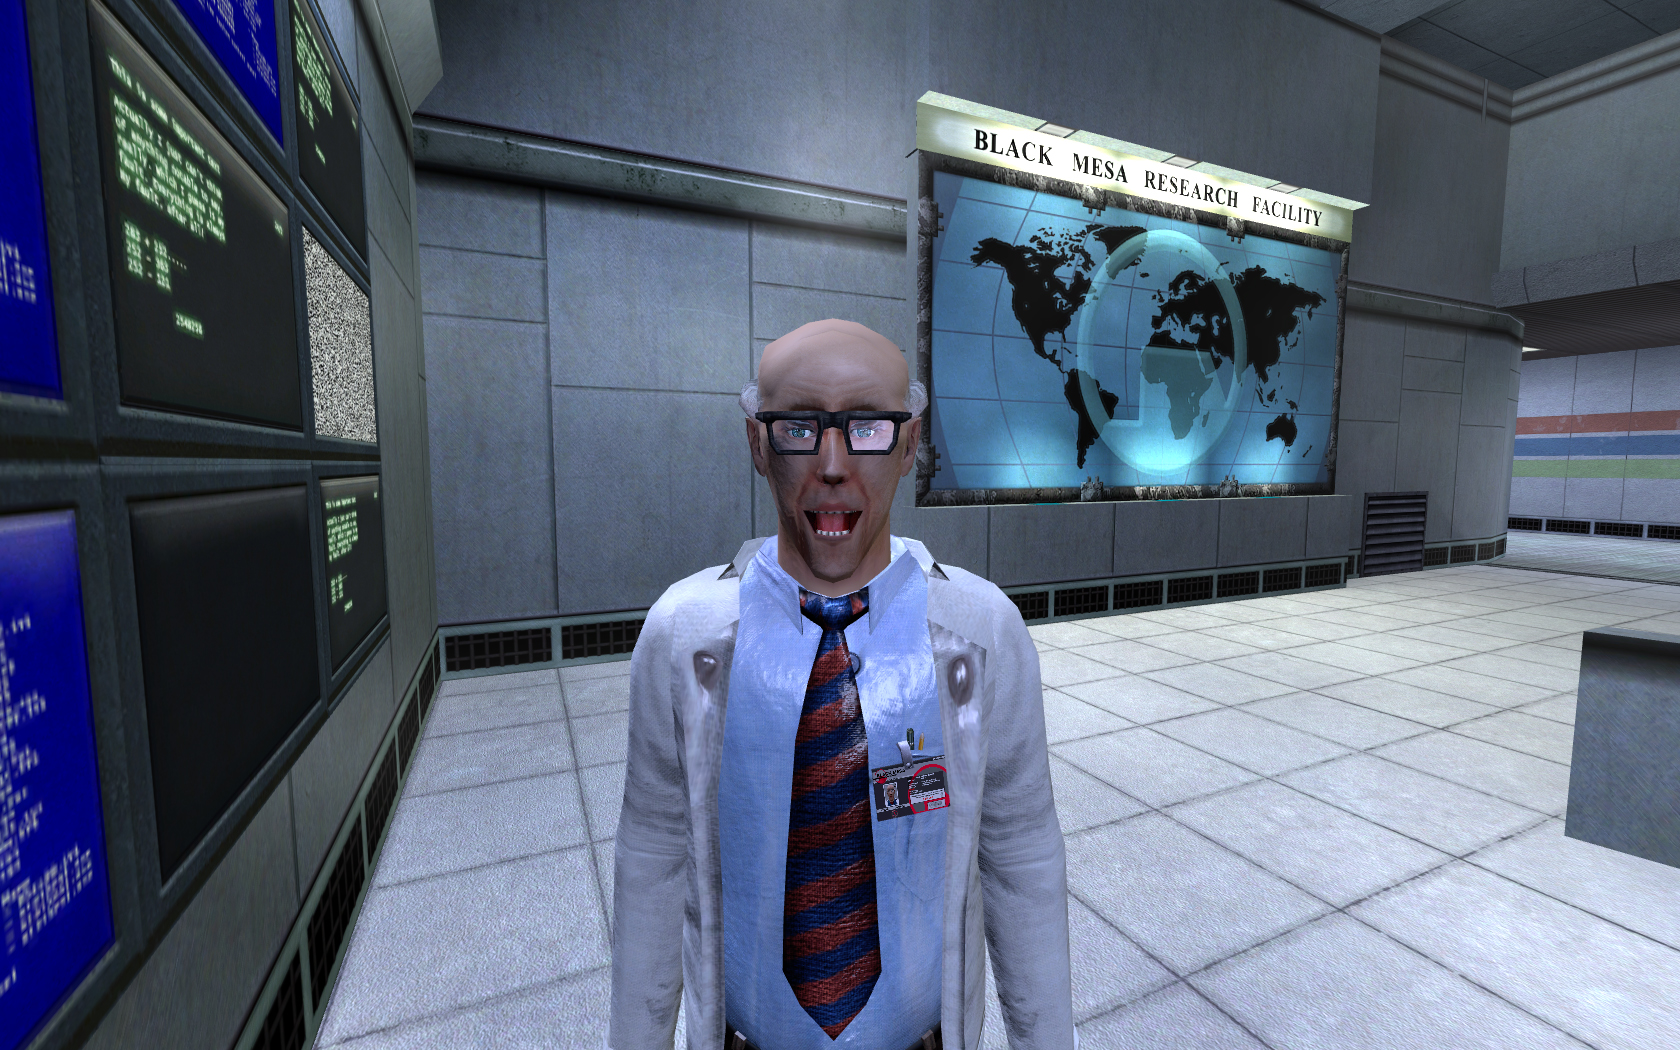 Half life scientist. Доктор Брин half-Life 1. Half Life 1 ученый. Доктор Брин half-Life 2. Доктор Кляйнер Black Mesa.